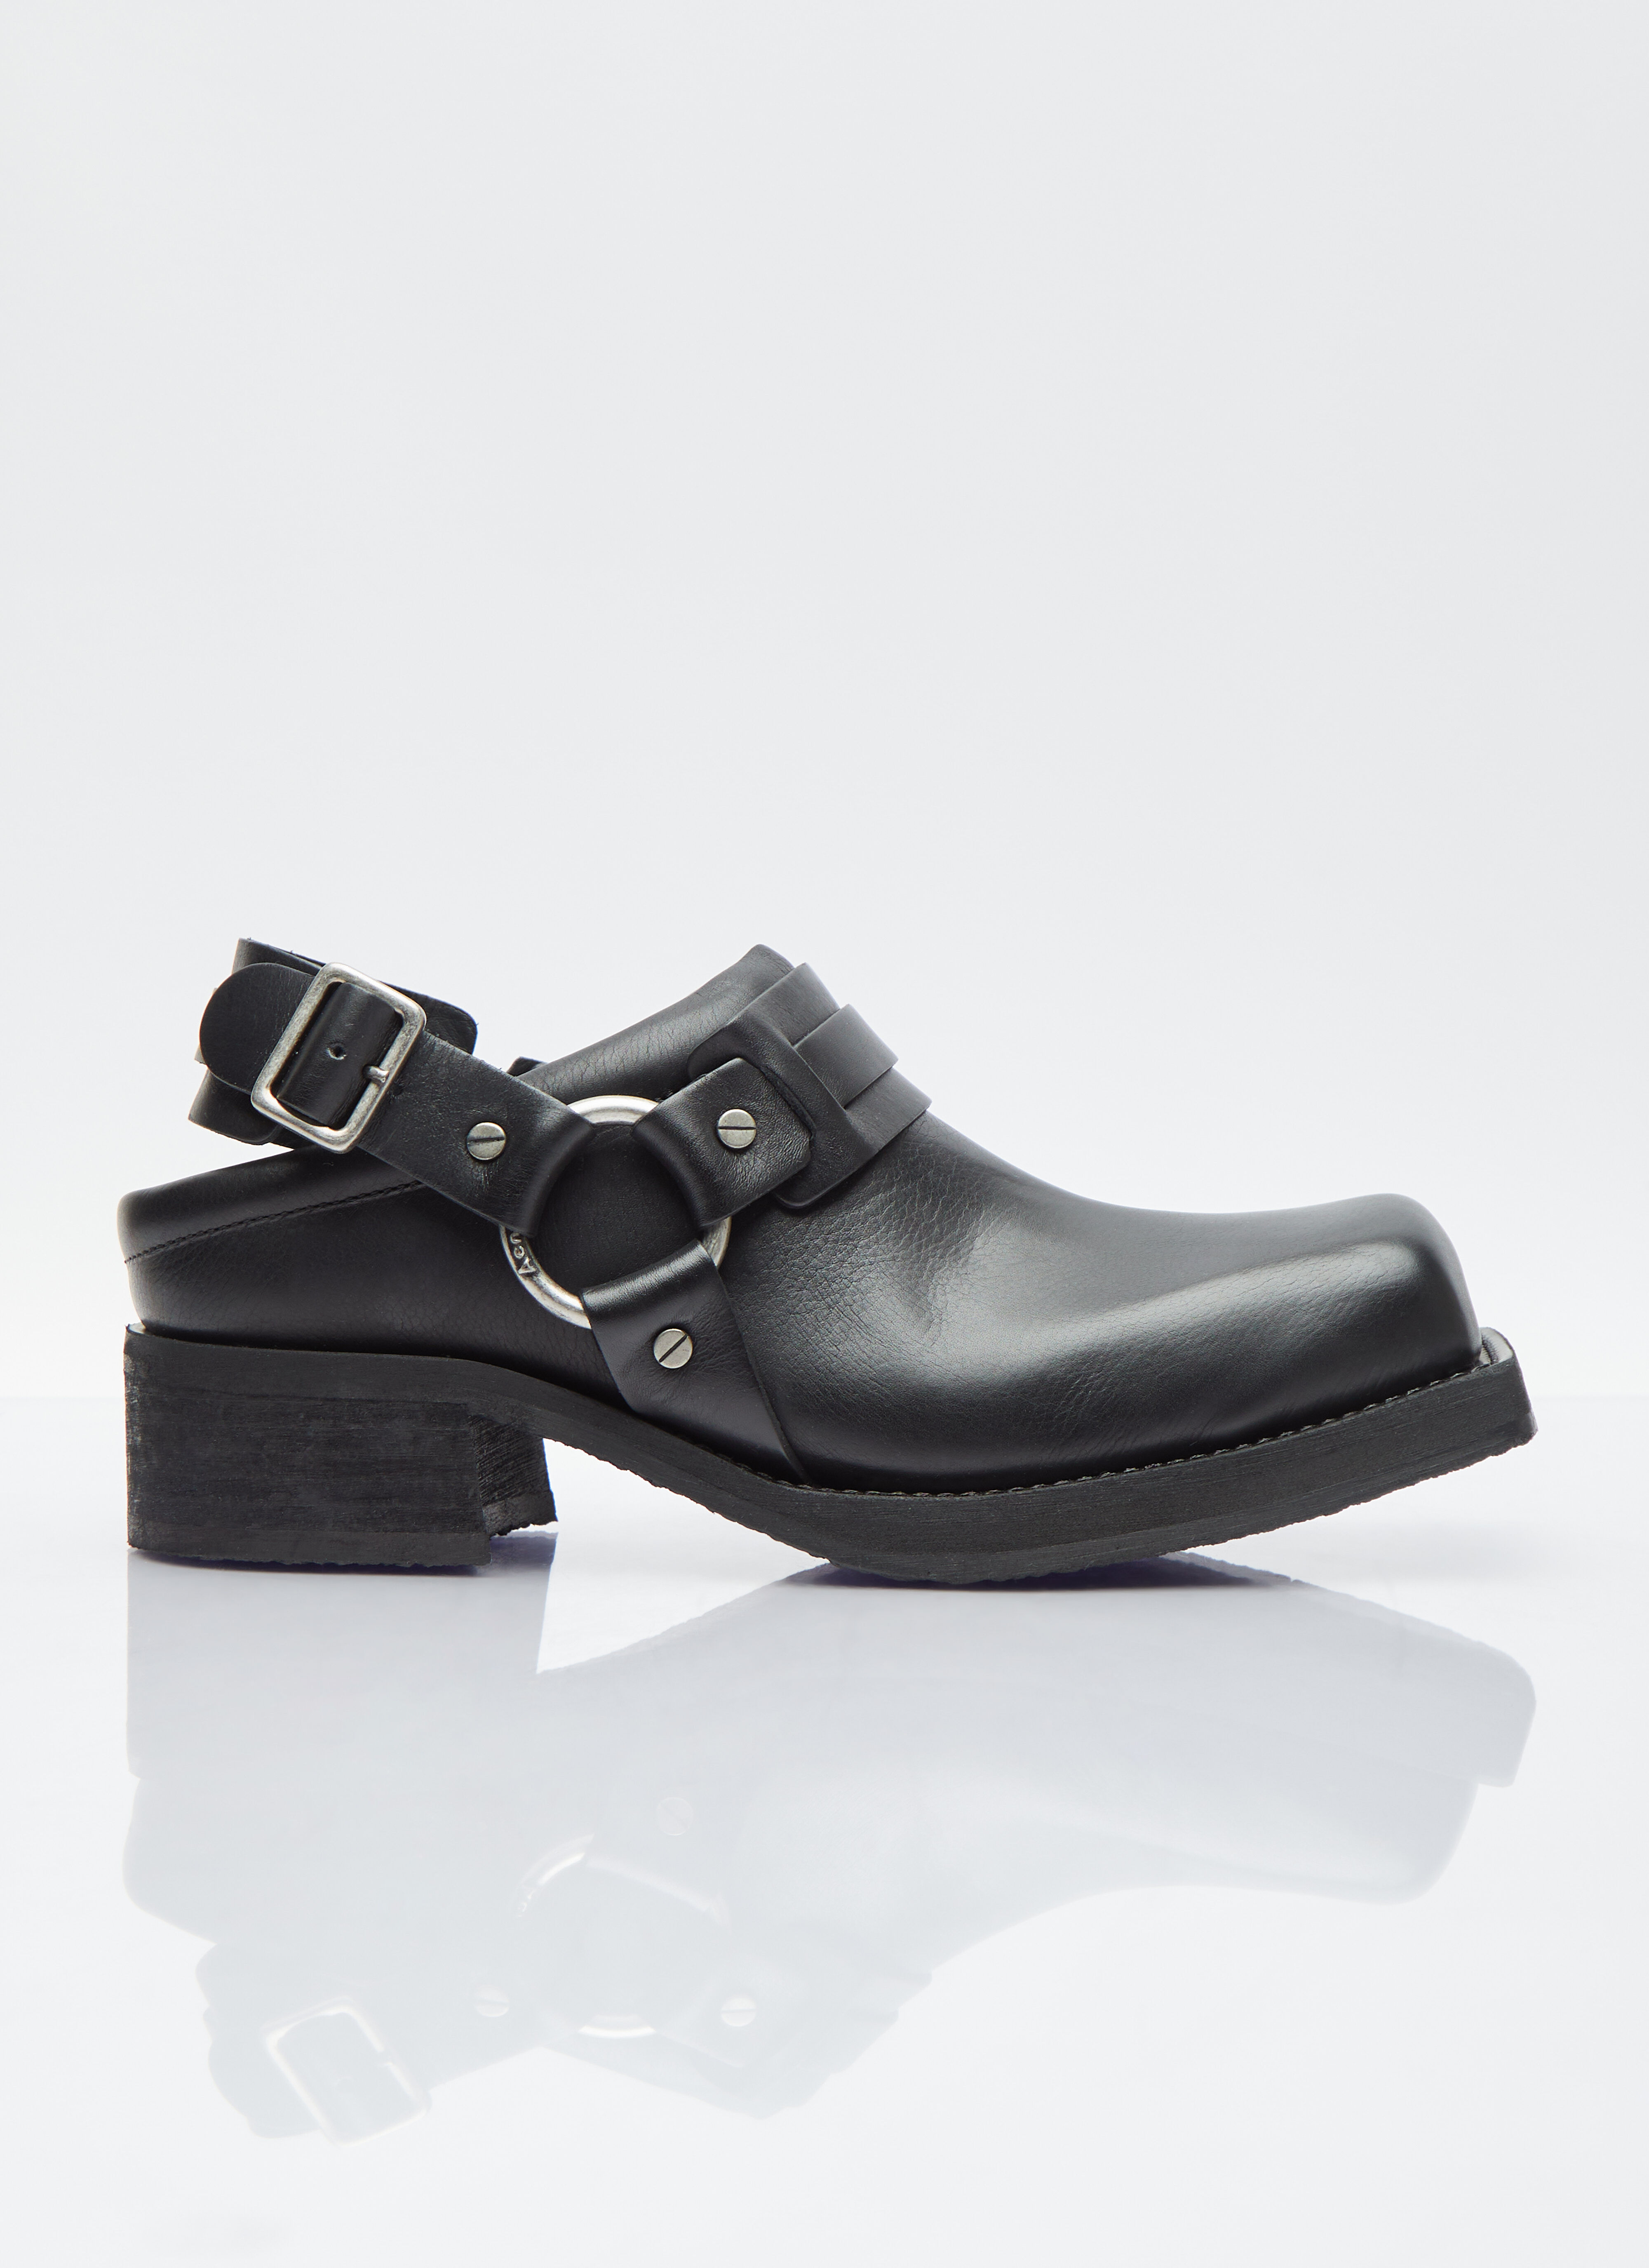 Acne Studios Buckle Leather Shoes Black acn0256021